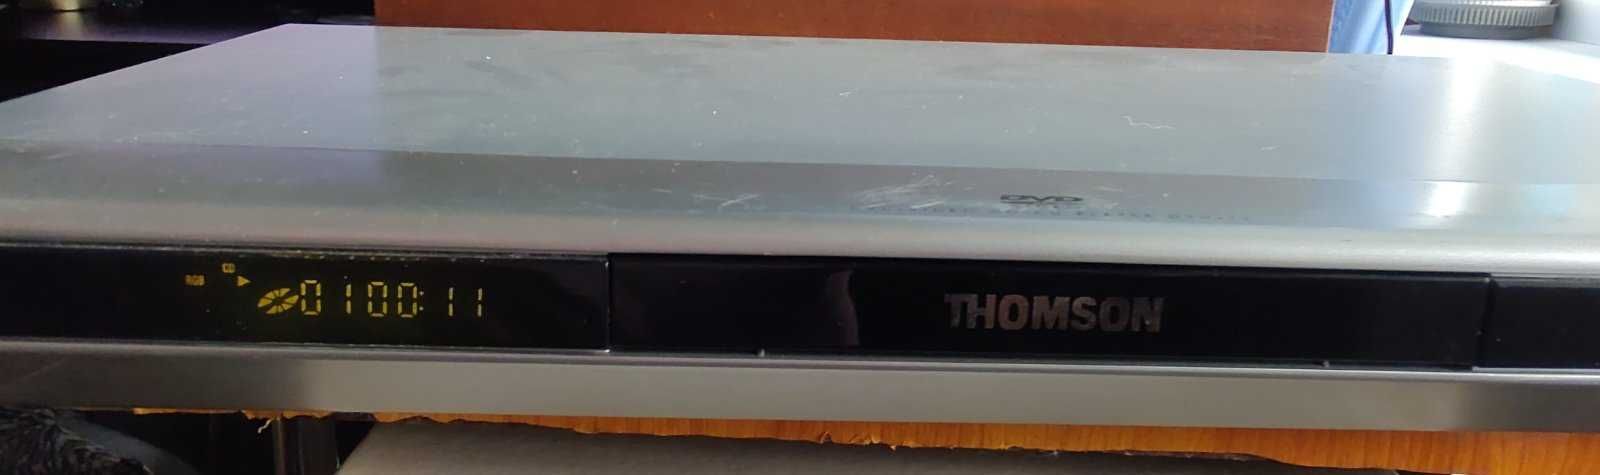 DVD Thomson DTH-213 R